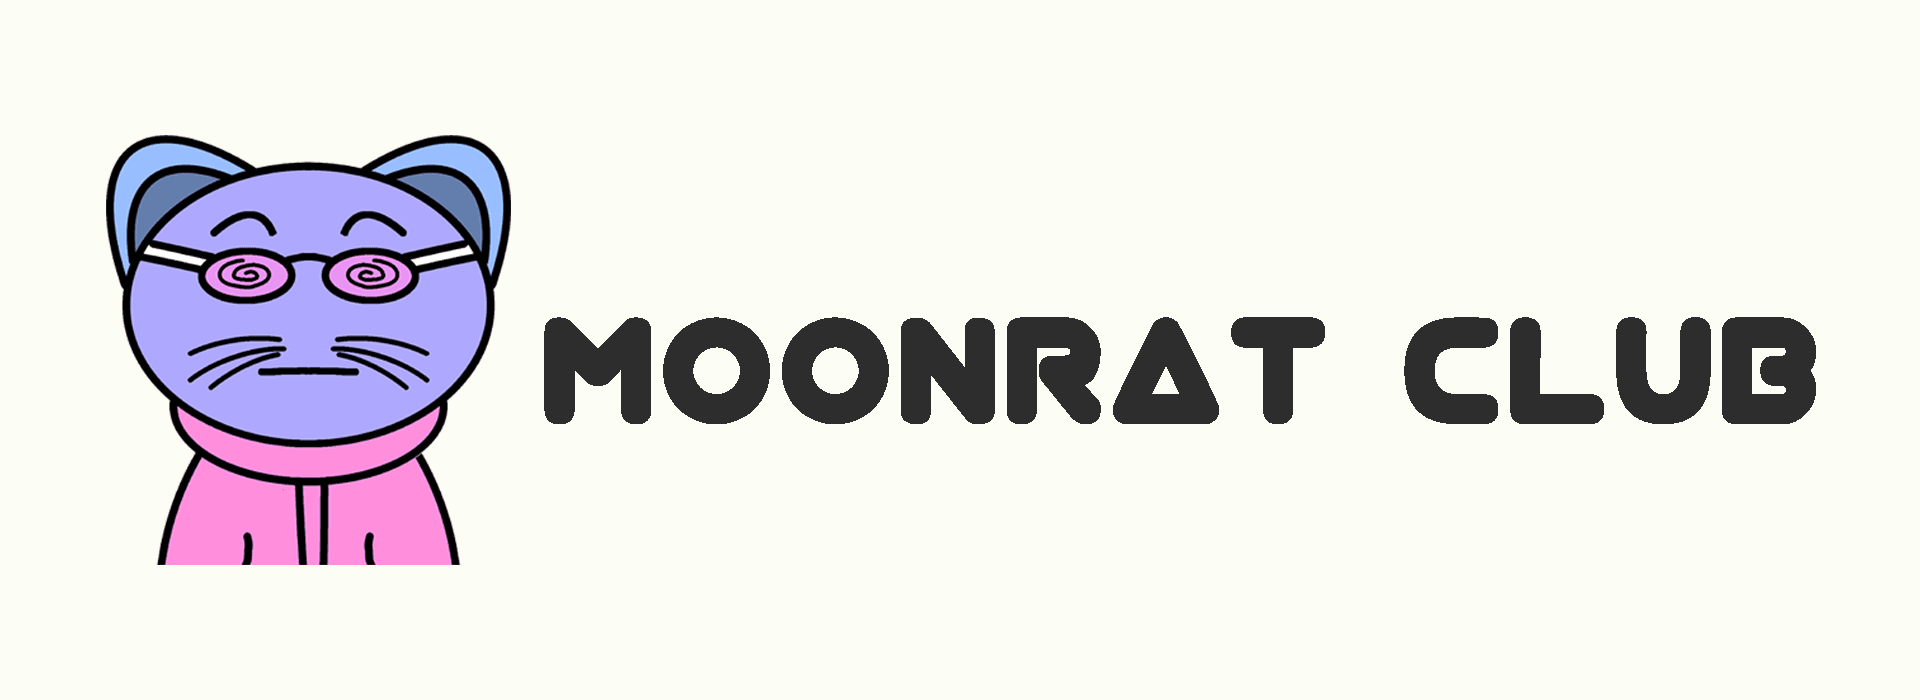 Moonrat Club